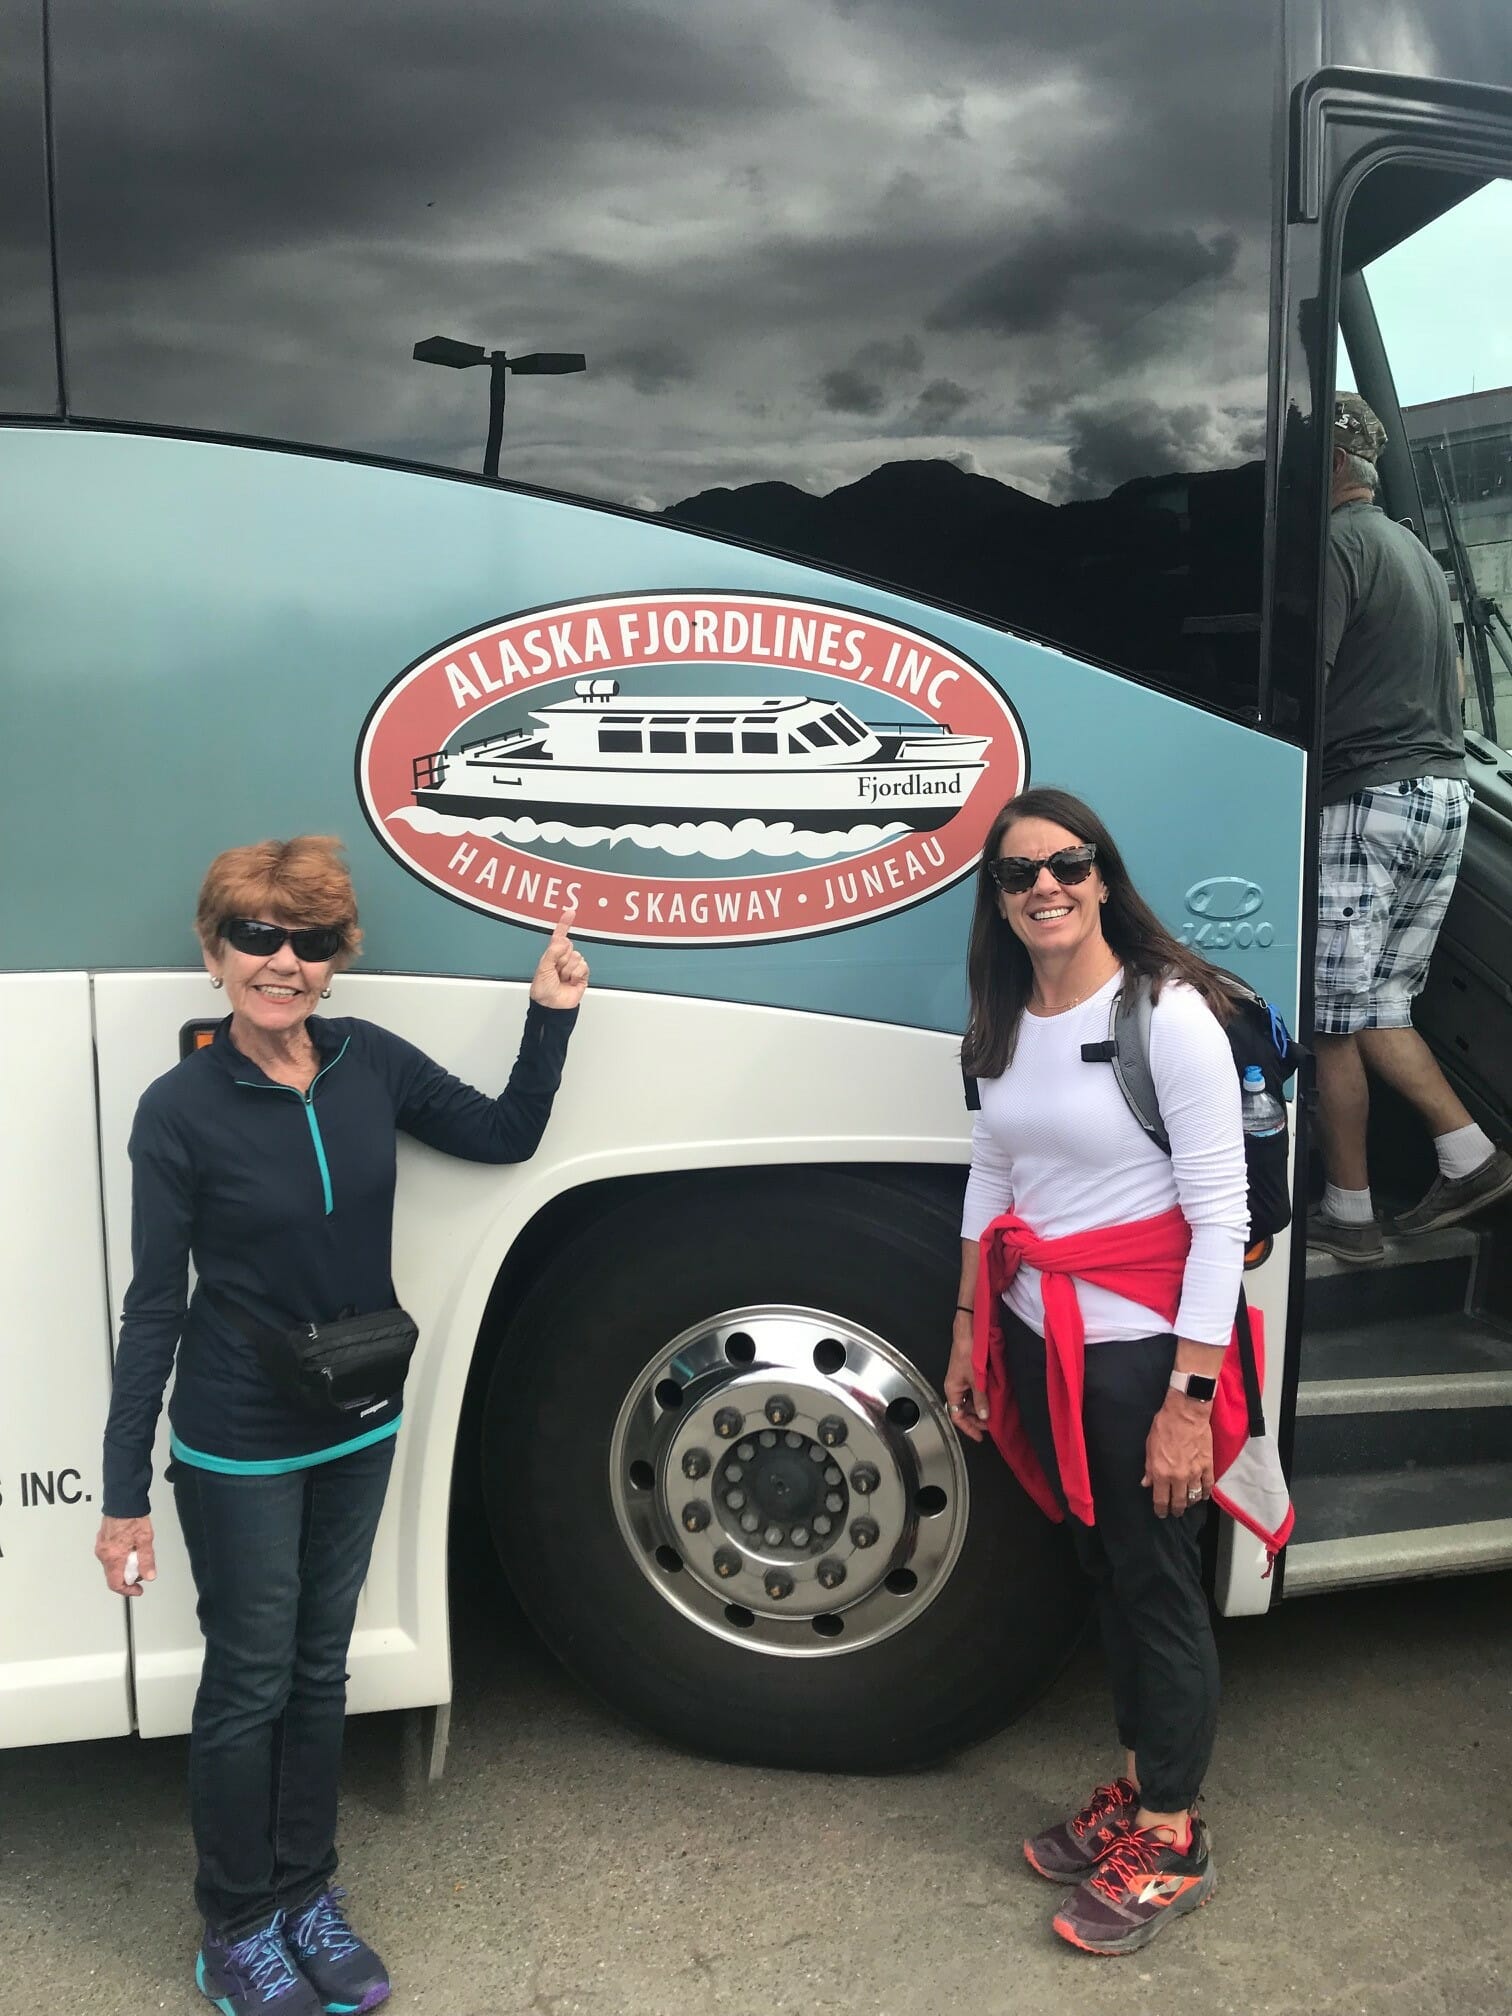 Alaska Fjordlines Tour Bus in Juneau Alaska